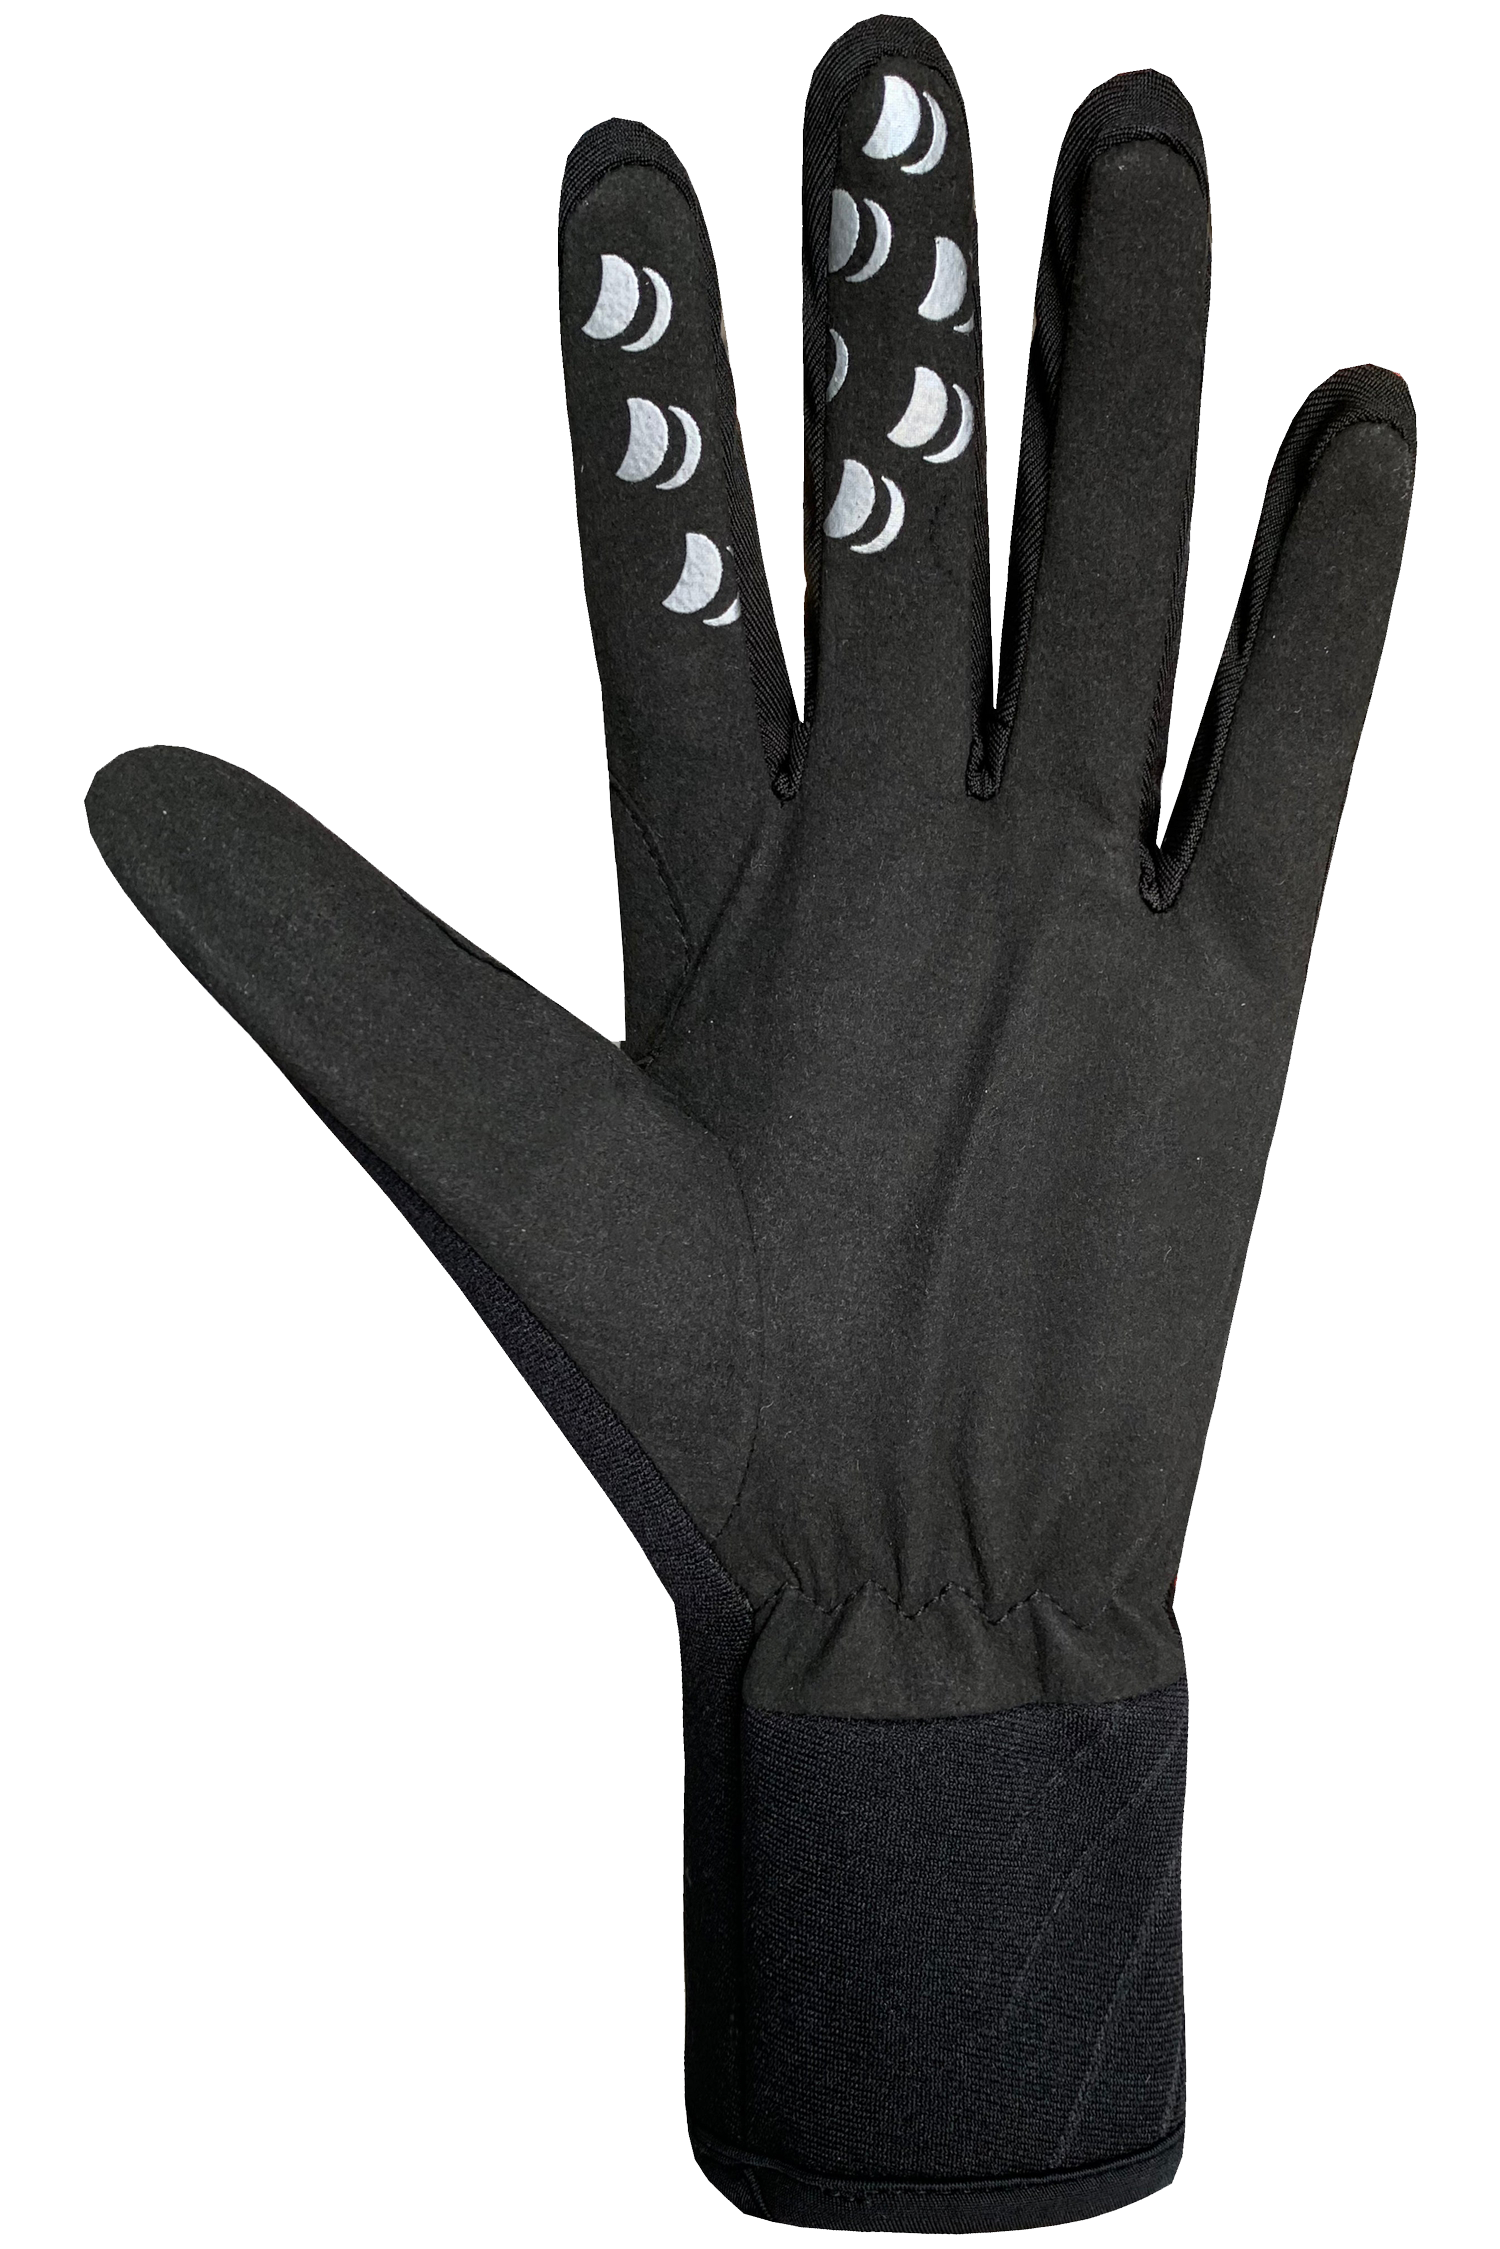 Maple Leaf Neo Gloves - Men-Glove-Auclair-Auclair Sports